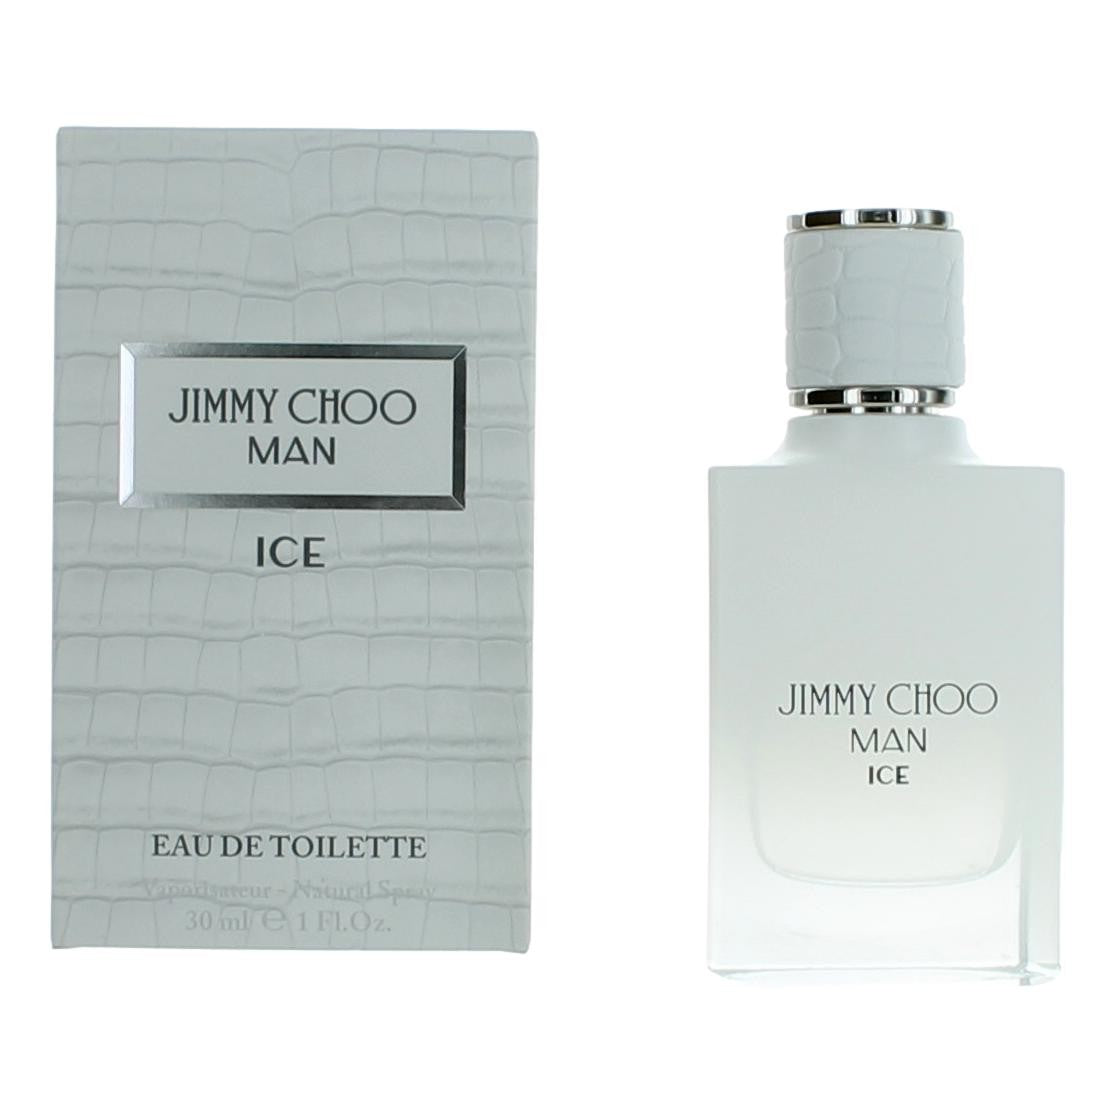 Jimmy Choo Man Ice by Jimmy Choo, 1 oz EDT Spray for Men